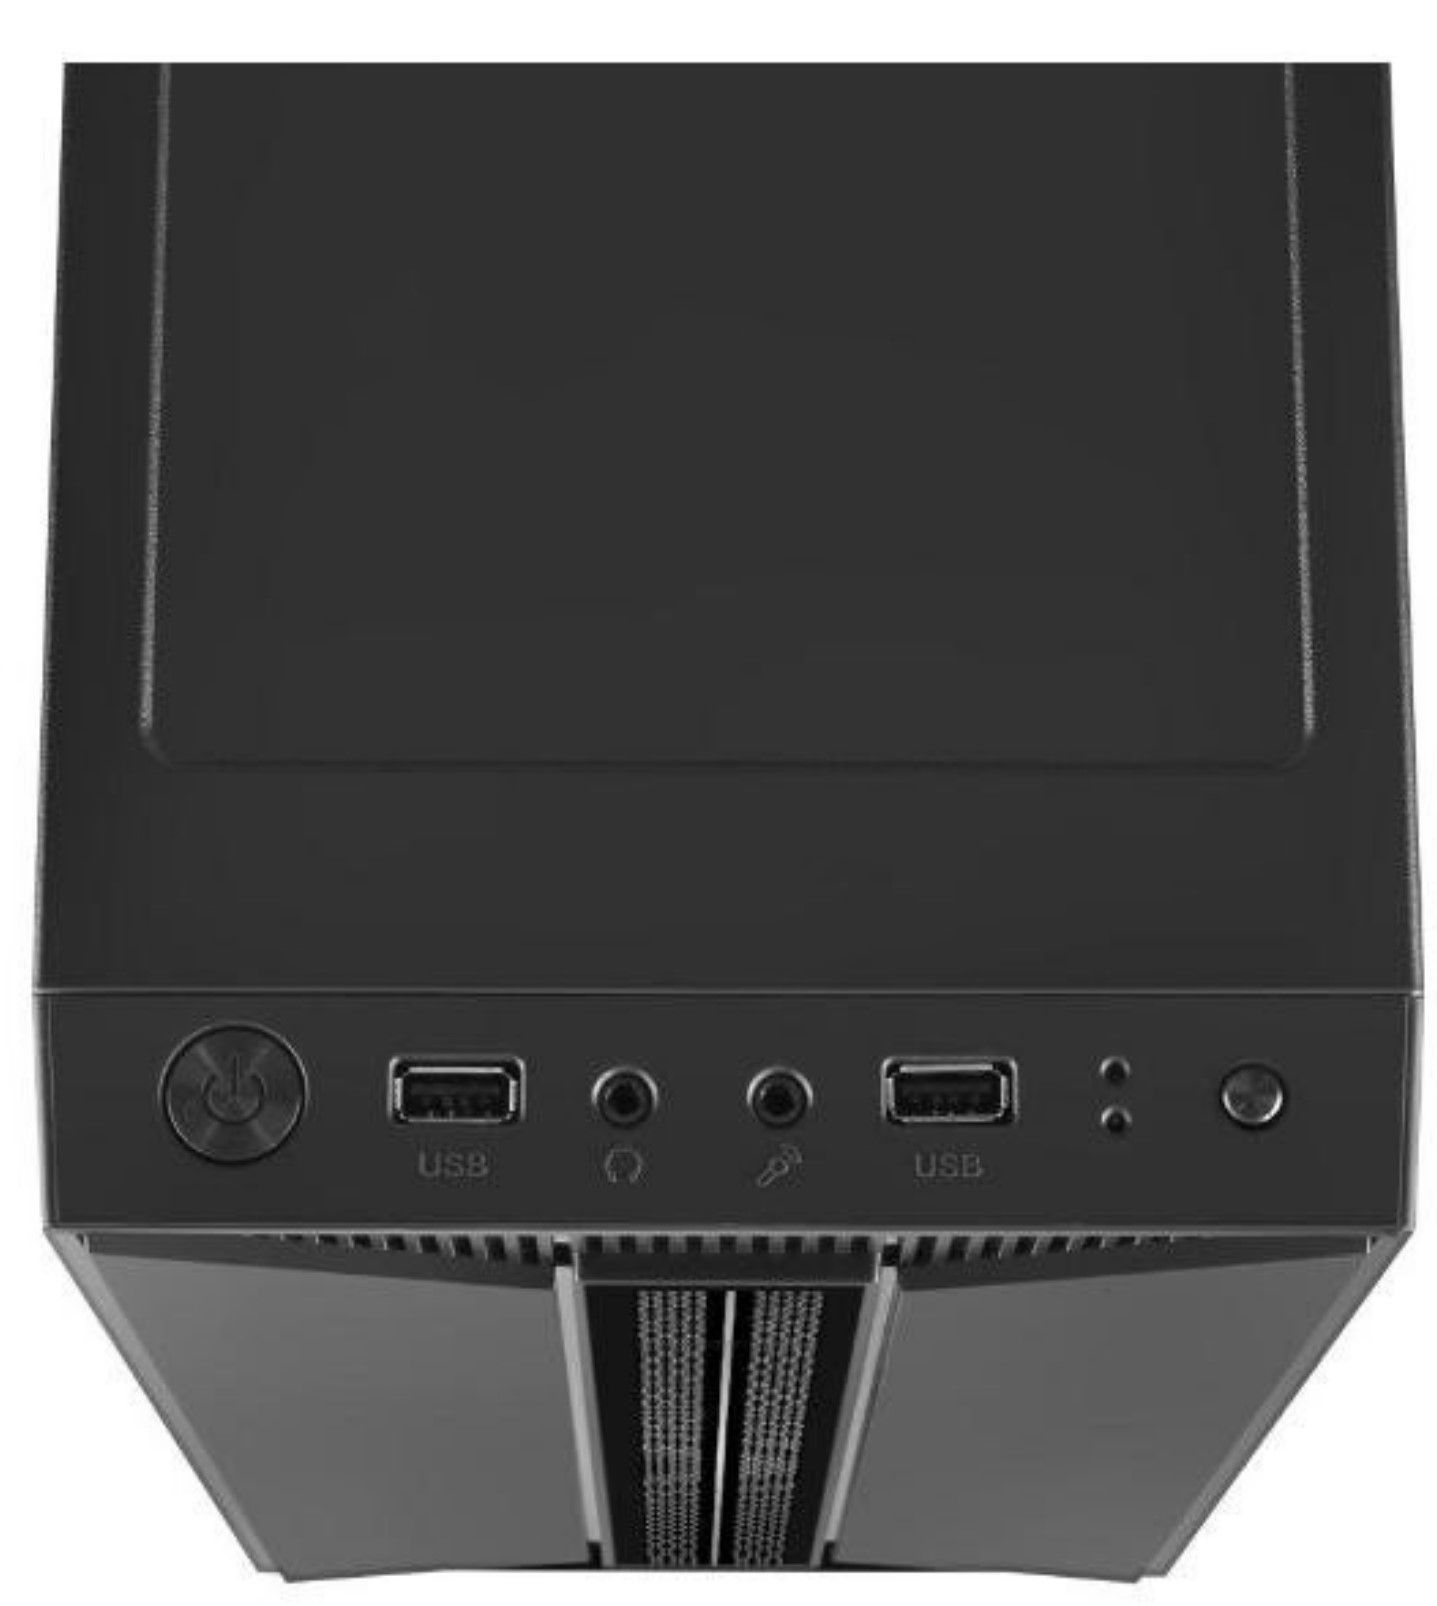 Корпус для компьютера Ginzzu B350 черный